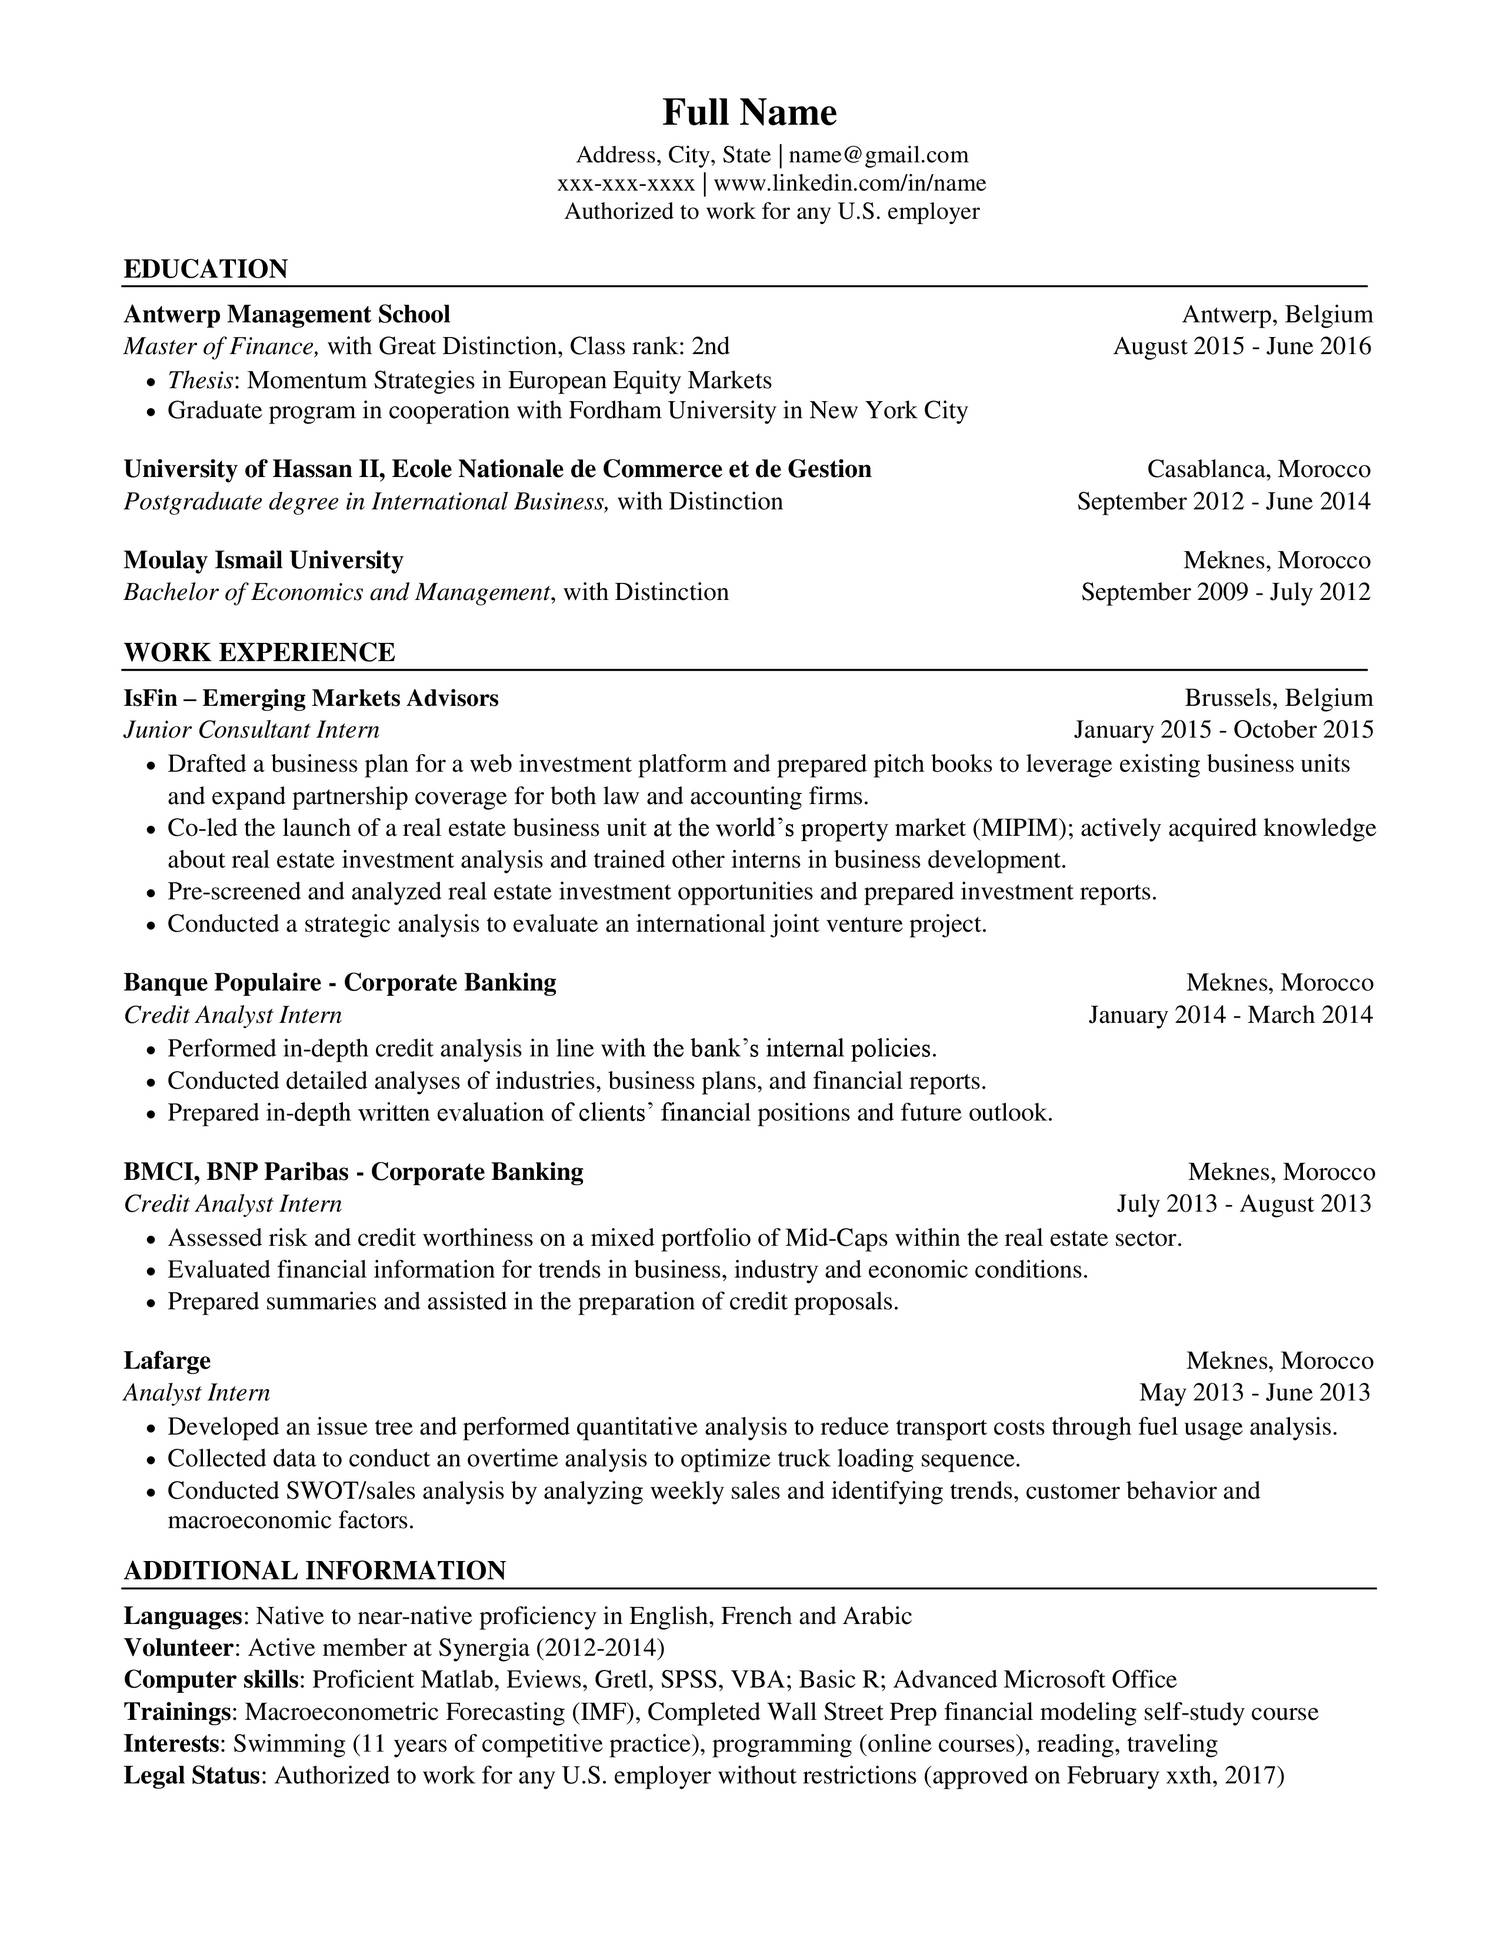 resume professional summary reddit